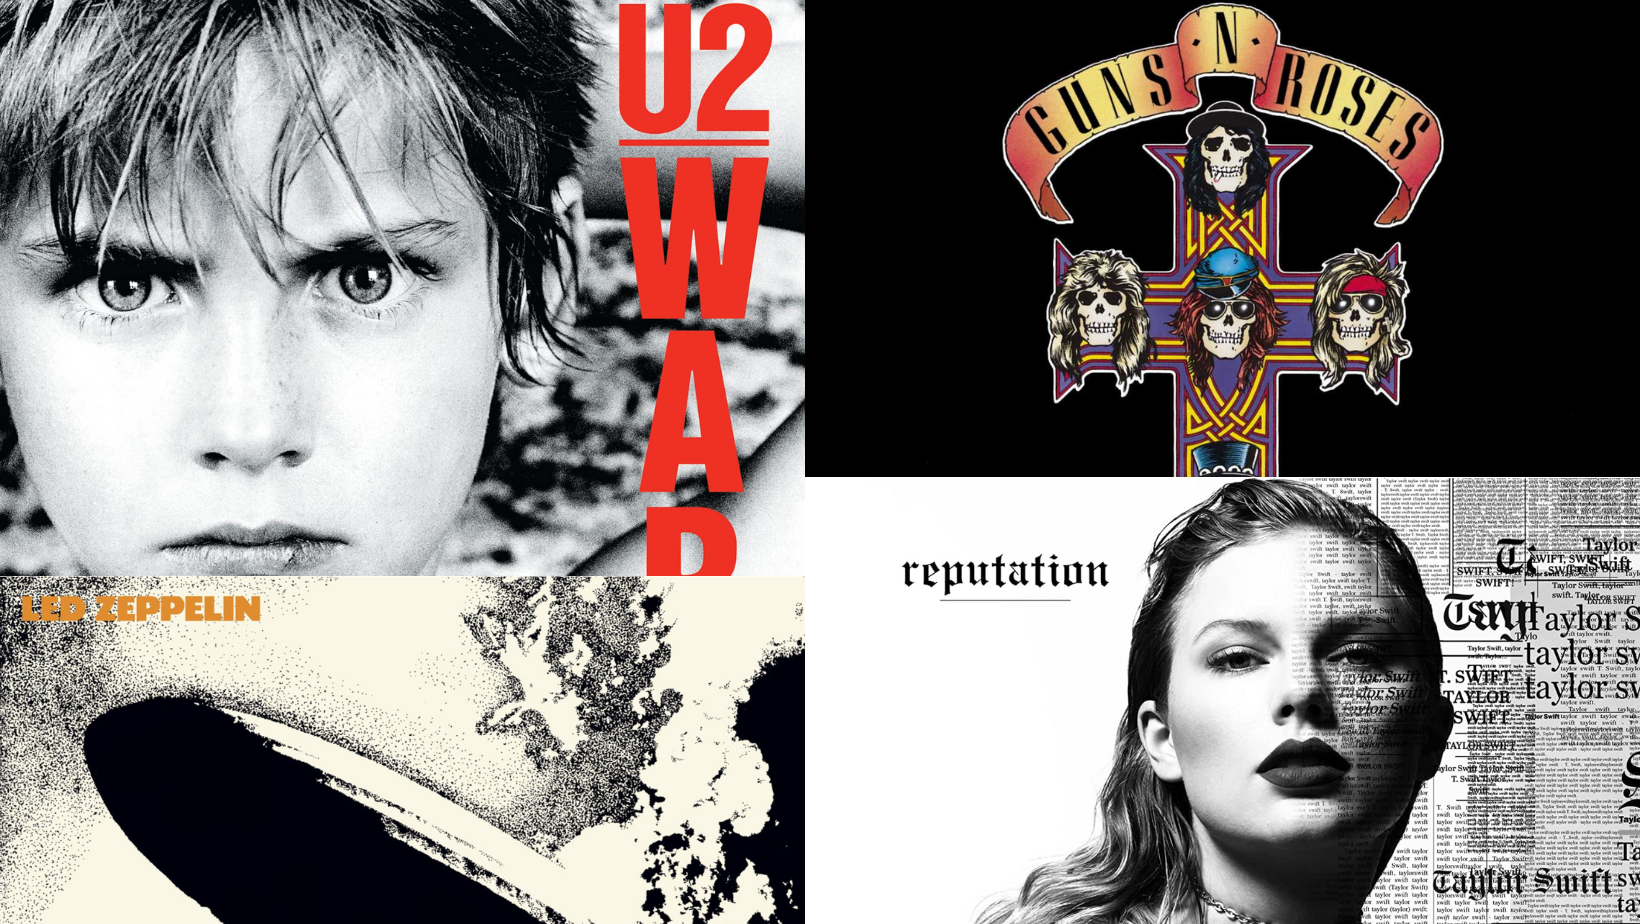 U2 Guns N Roses Led Zeppelin Taylor Swift collage.